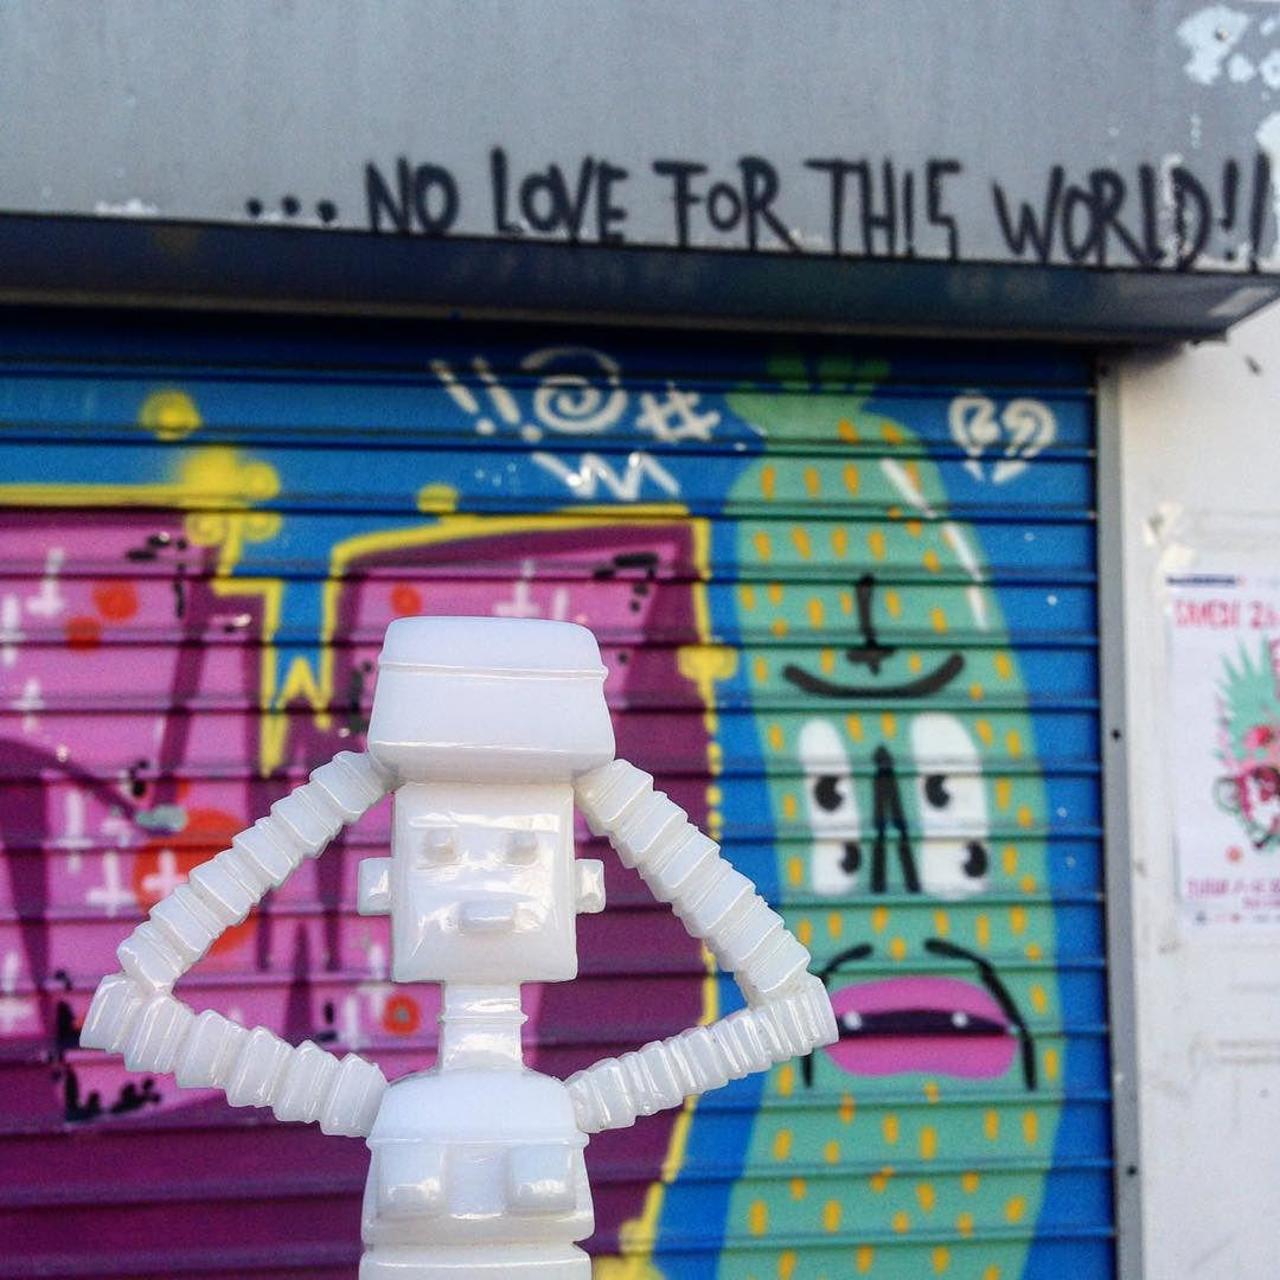 #Paris #graffiti photo by @k8wanitas http://ift.tt/1ZnDOyv #StreetArt http://t.co/ilIXeUtmCg